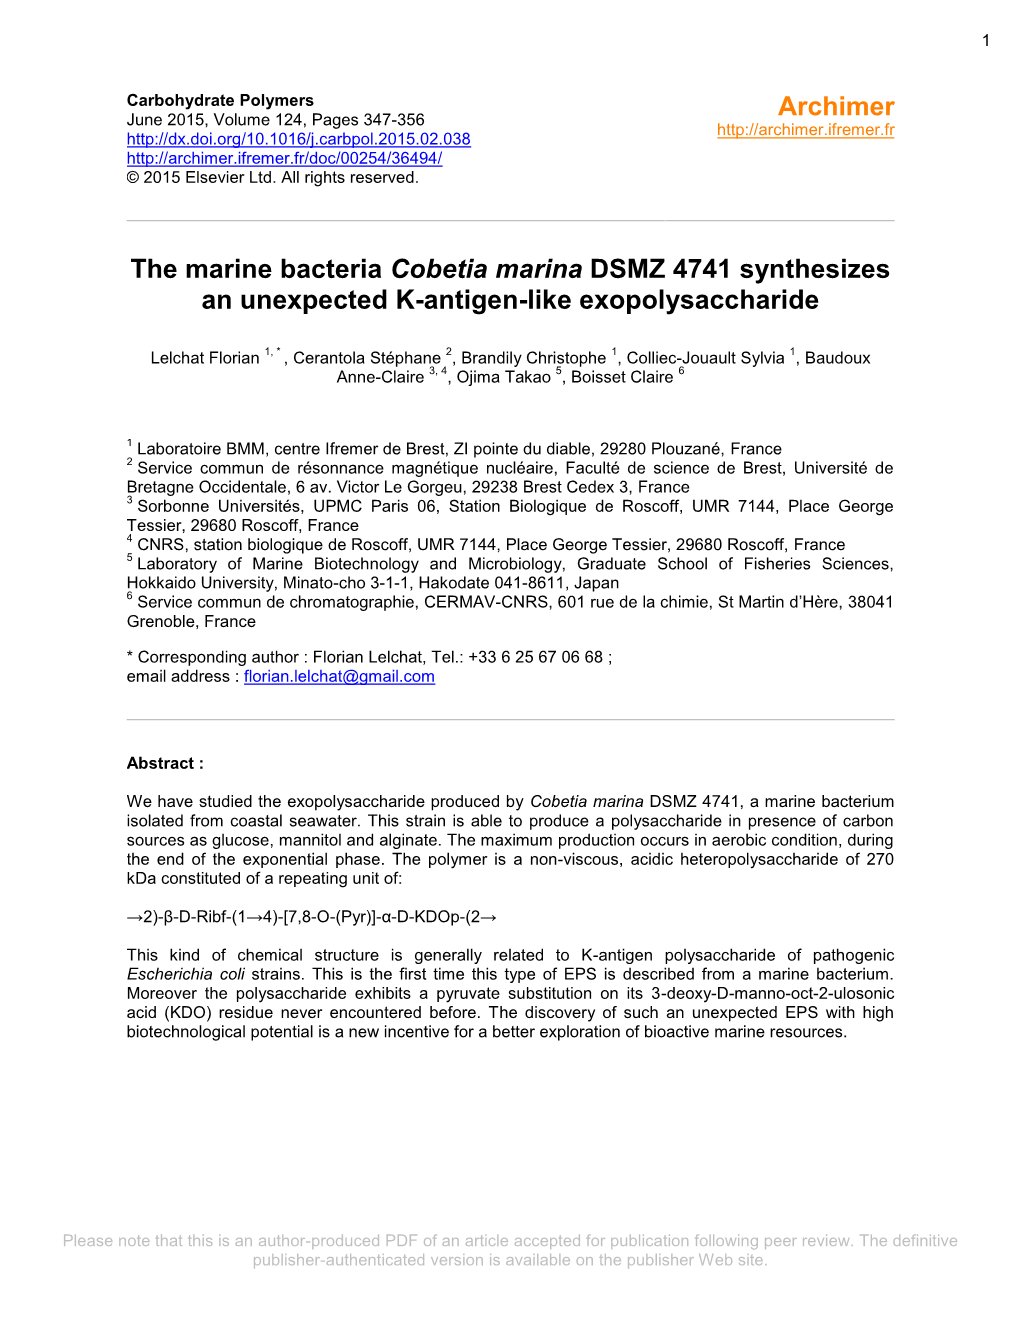 The Marine Bacteria Cobetia Marina DSMZ 4741 Synthesizes an Unexpected K-Antigen-Like Exopolysaccharide